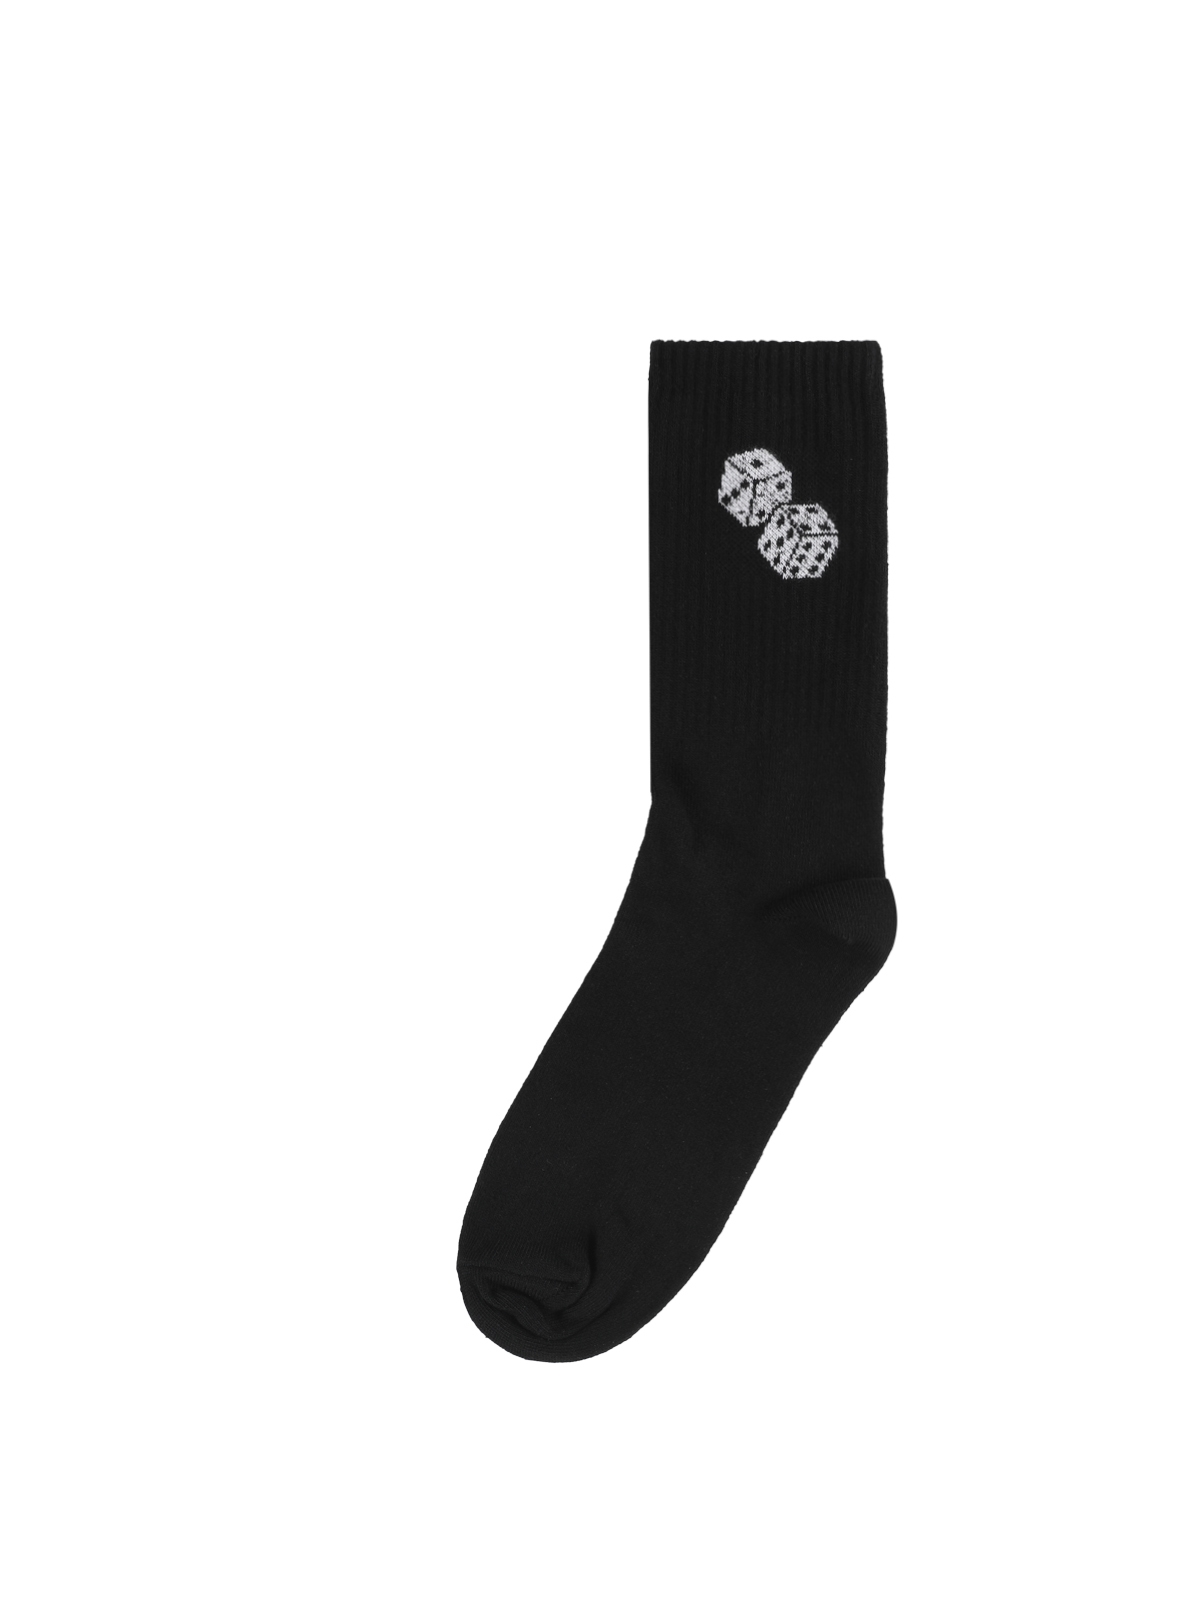 Zar Detaylı Siyah Çorap